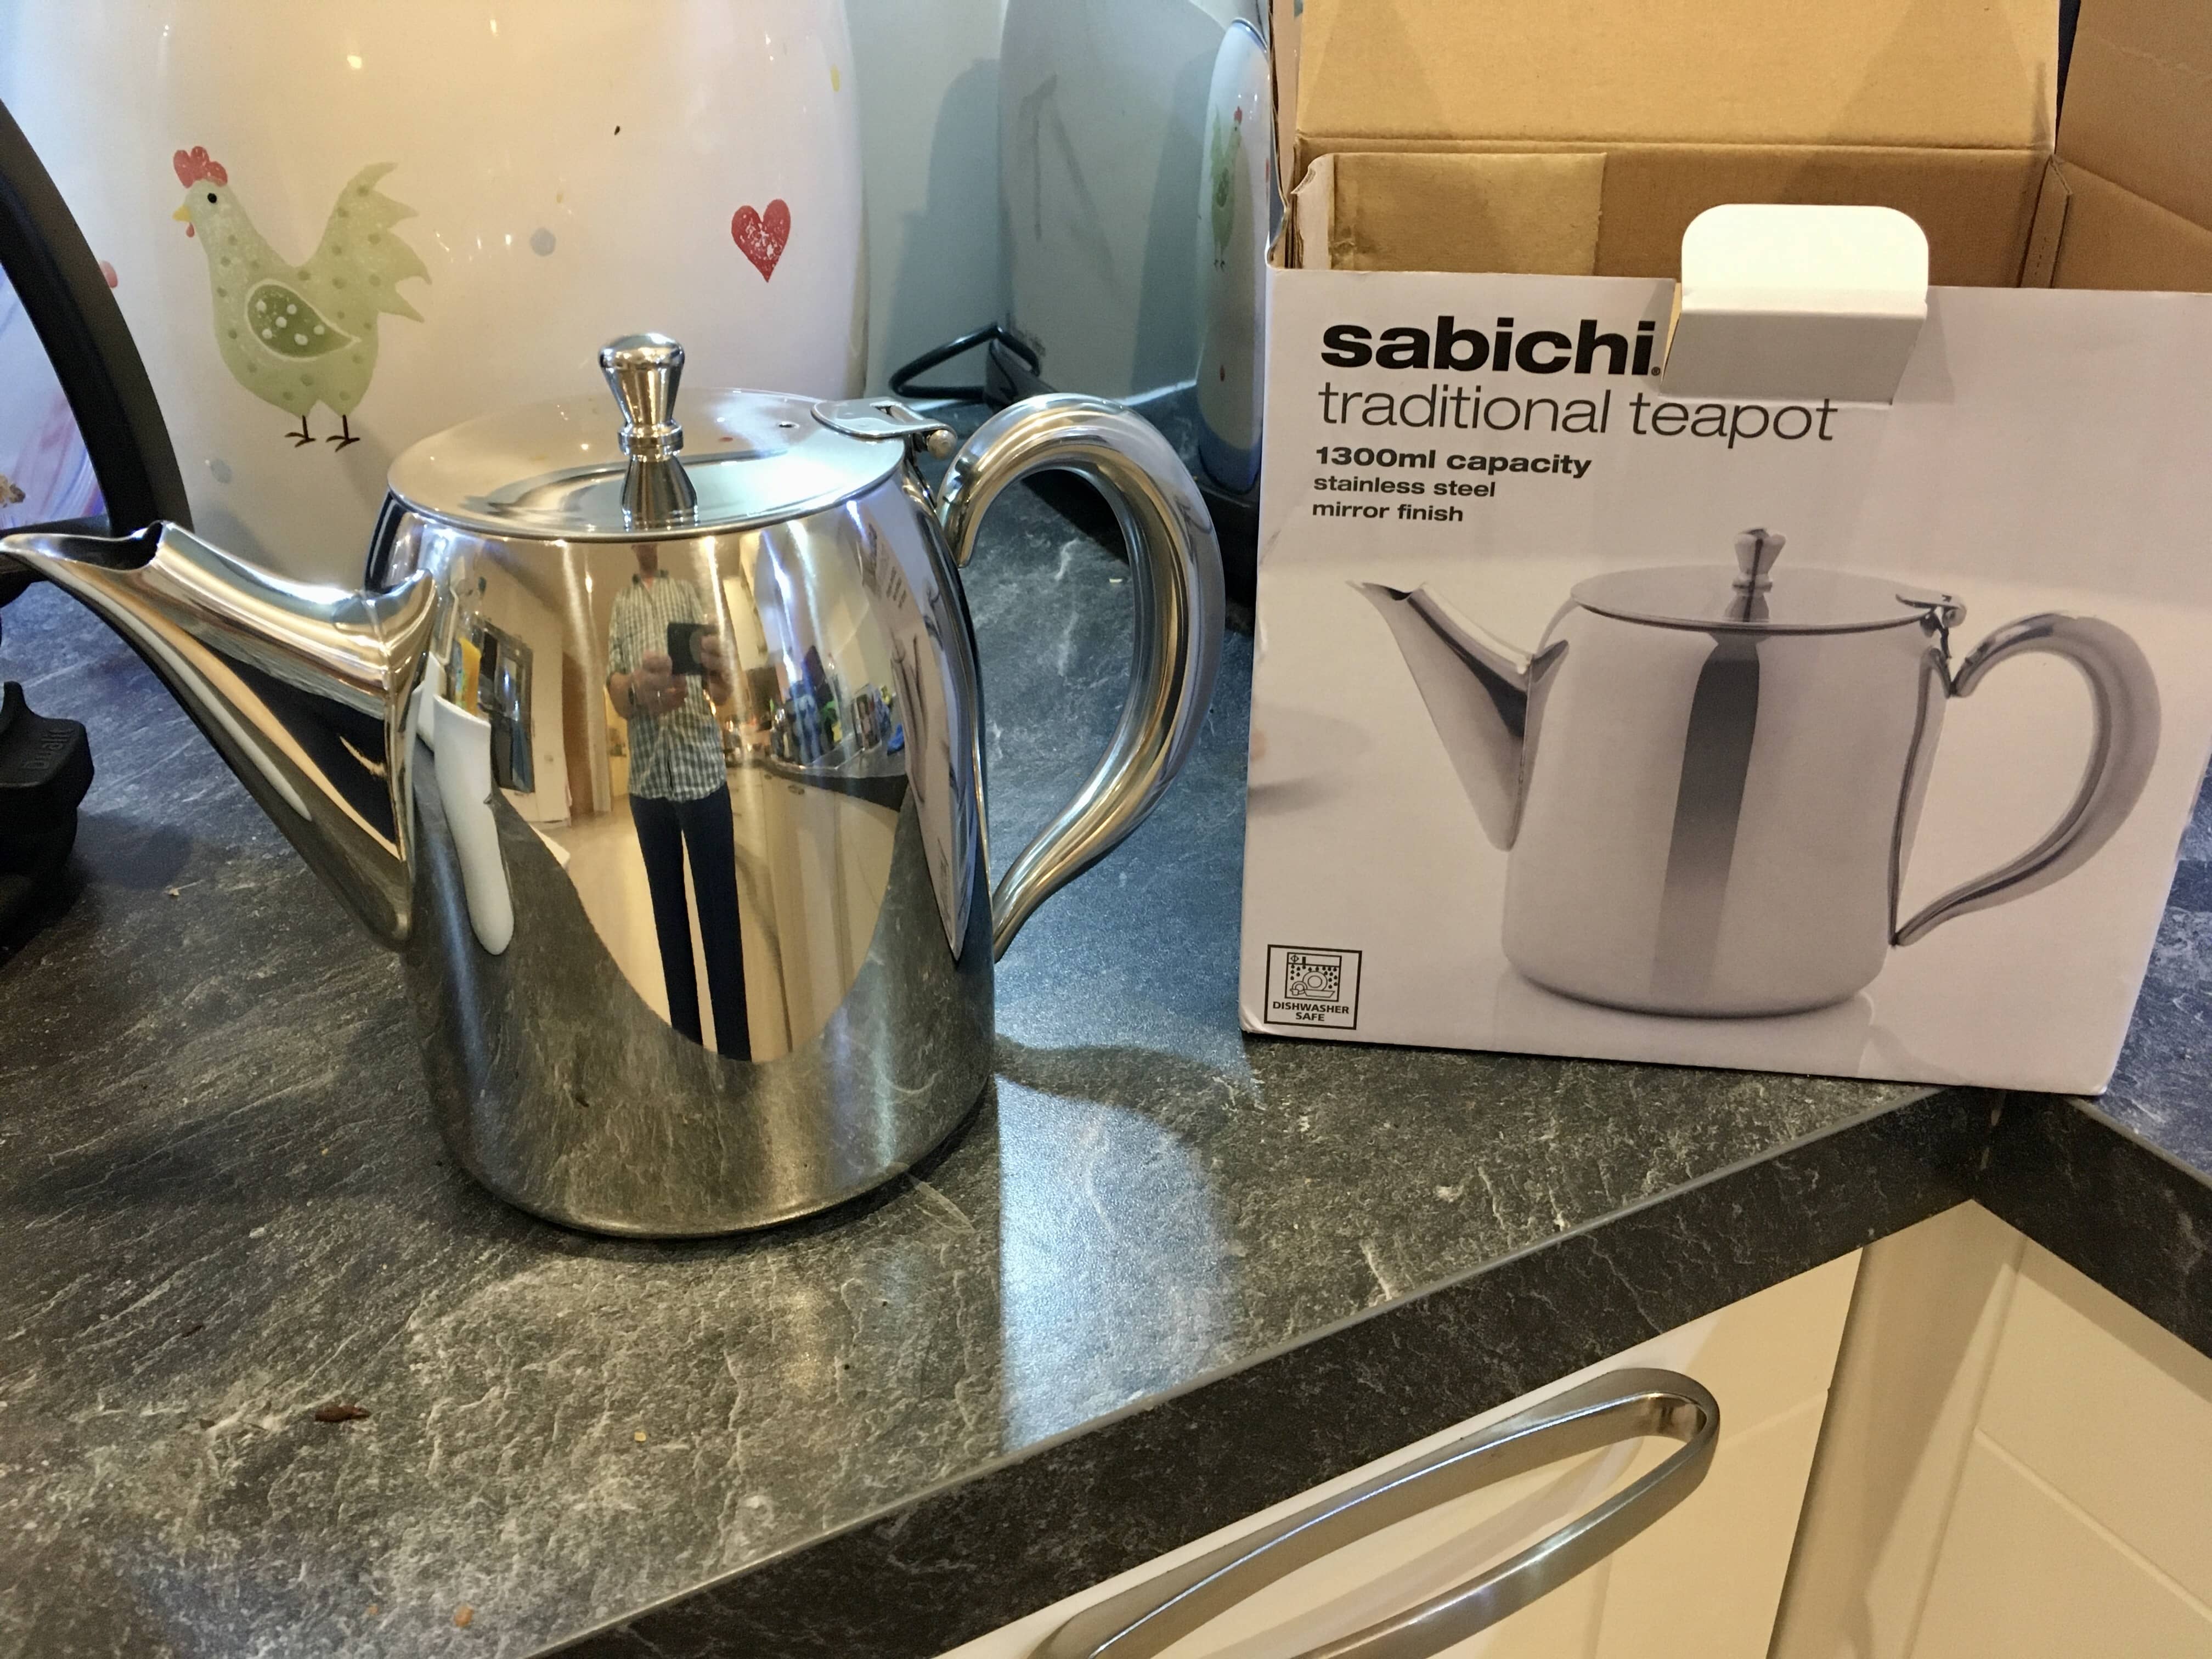 Sabinchi teapot and box